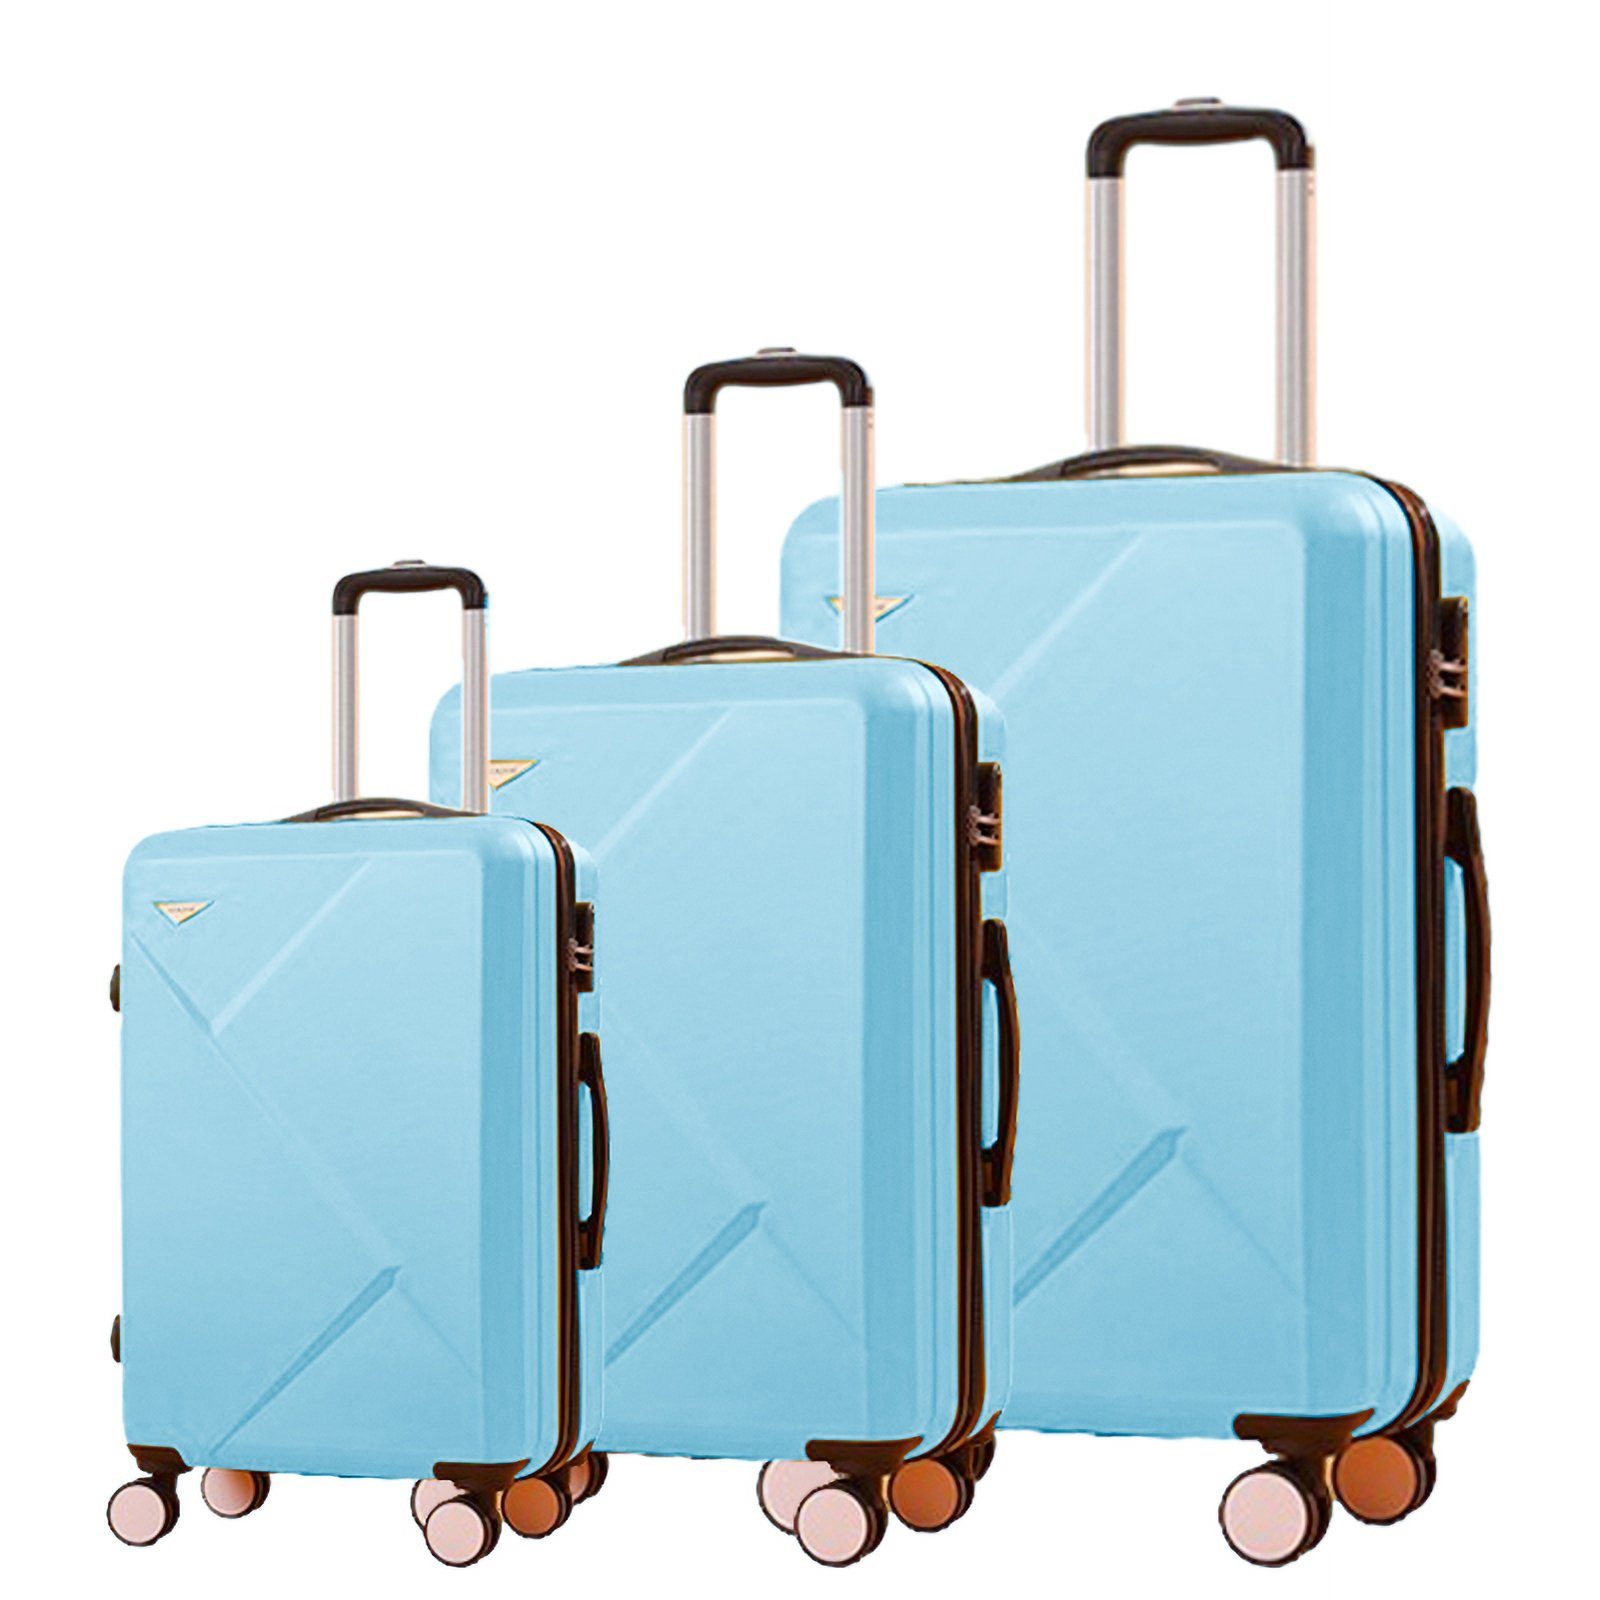 FUROKOY Kofferset 3-teiliges Set, Hartschalen-Handgepäck ABS-Material, , Rollkoffer, Reisekoffer mit Zahlenschloss blau